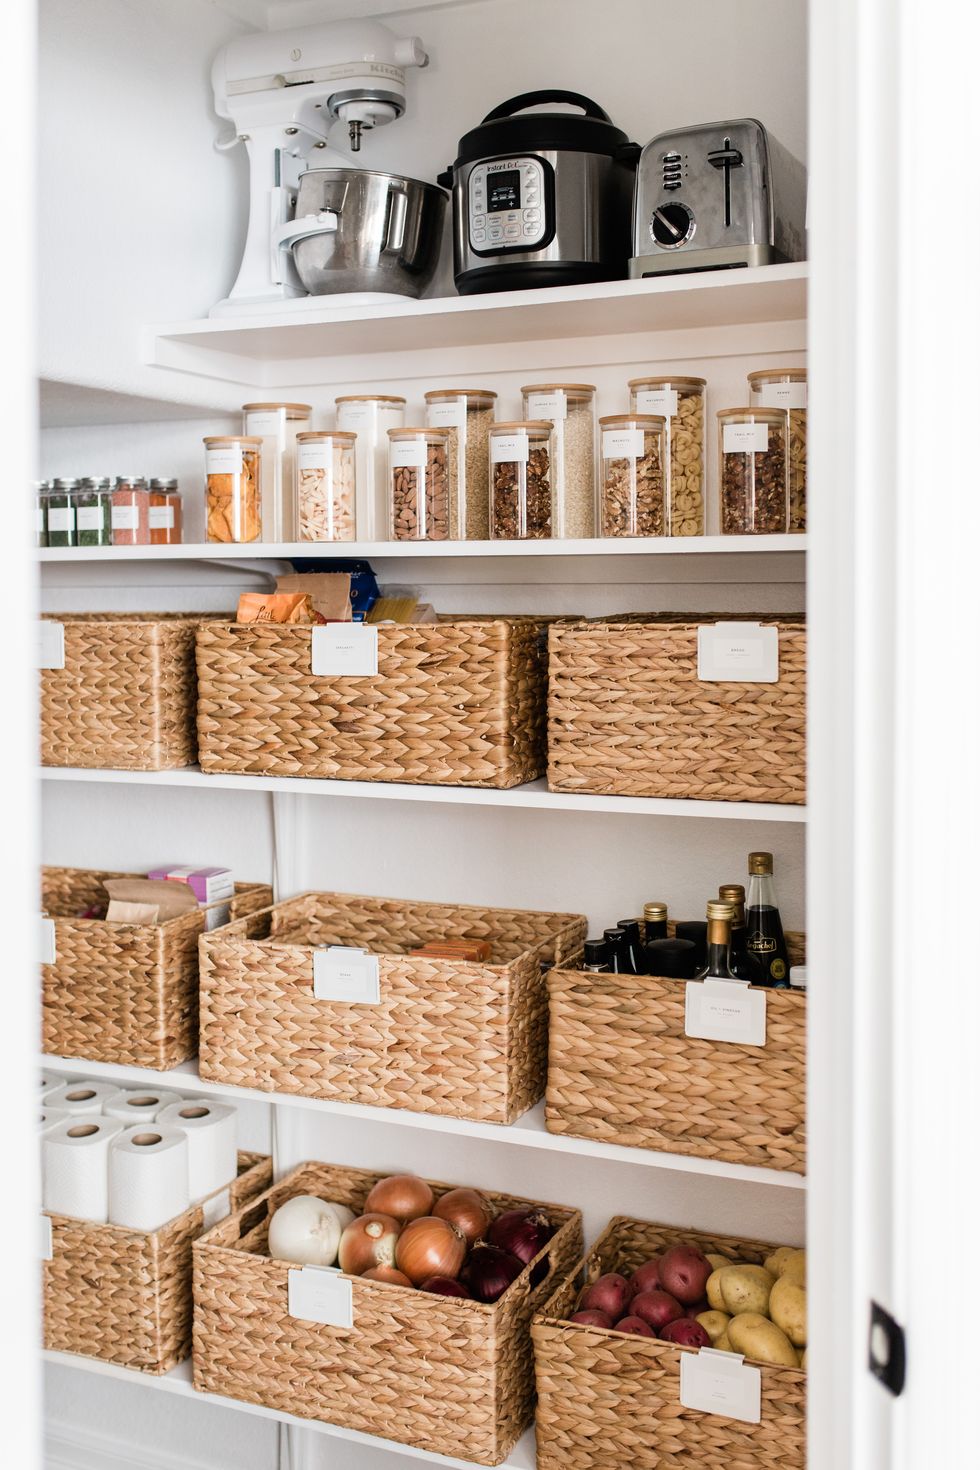 pantry organization ideas like produce baskets